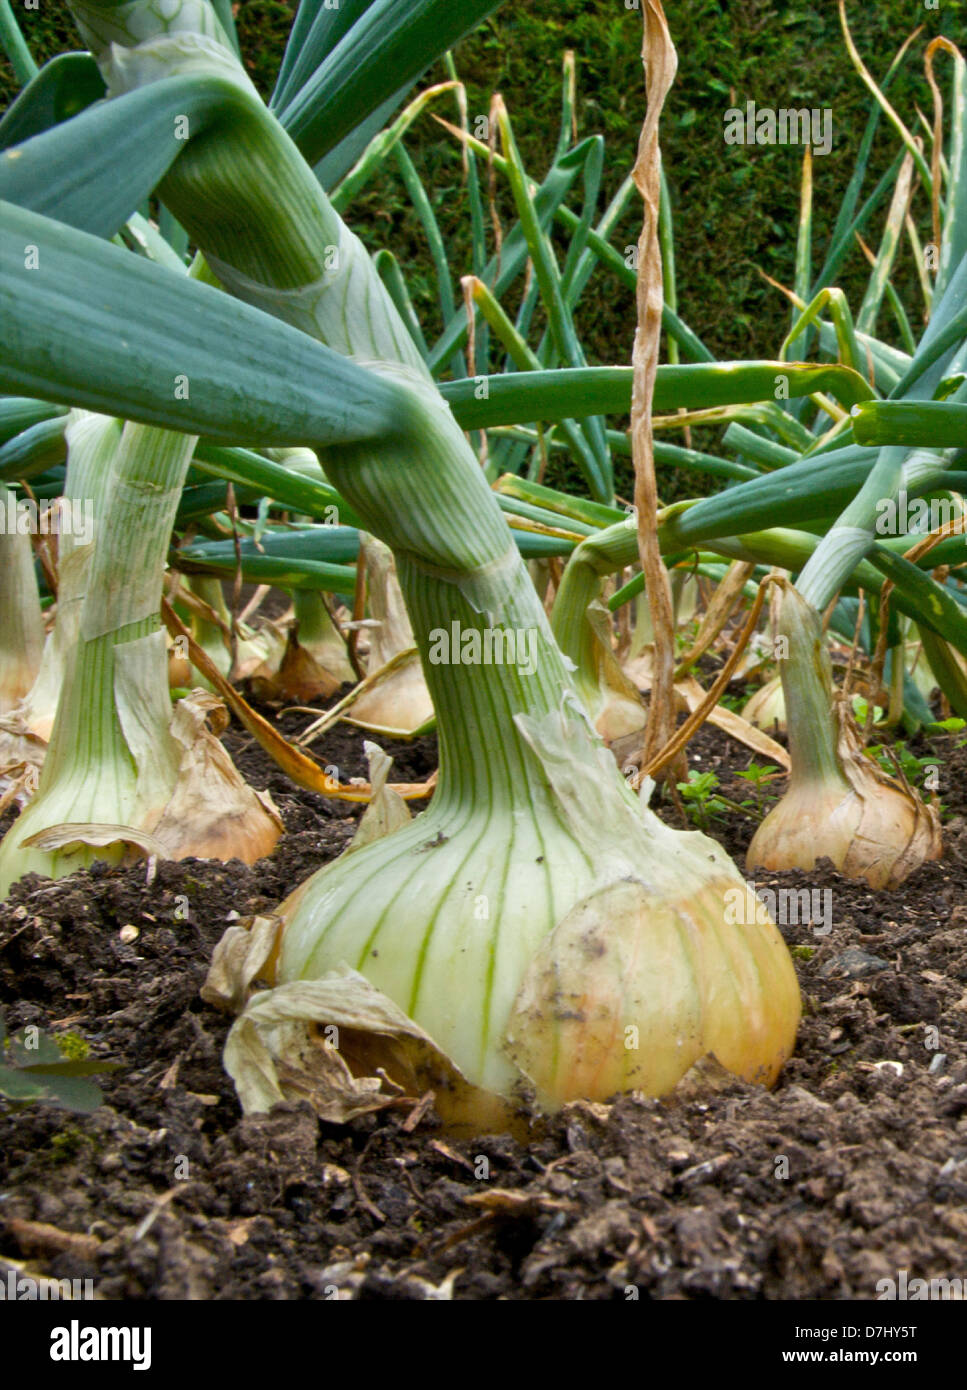 An onion crop in a vegetable garden Stock Photo